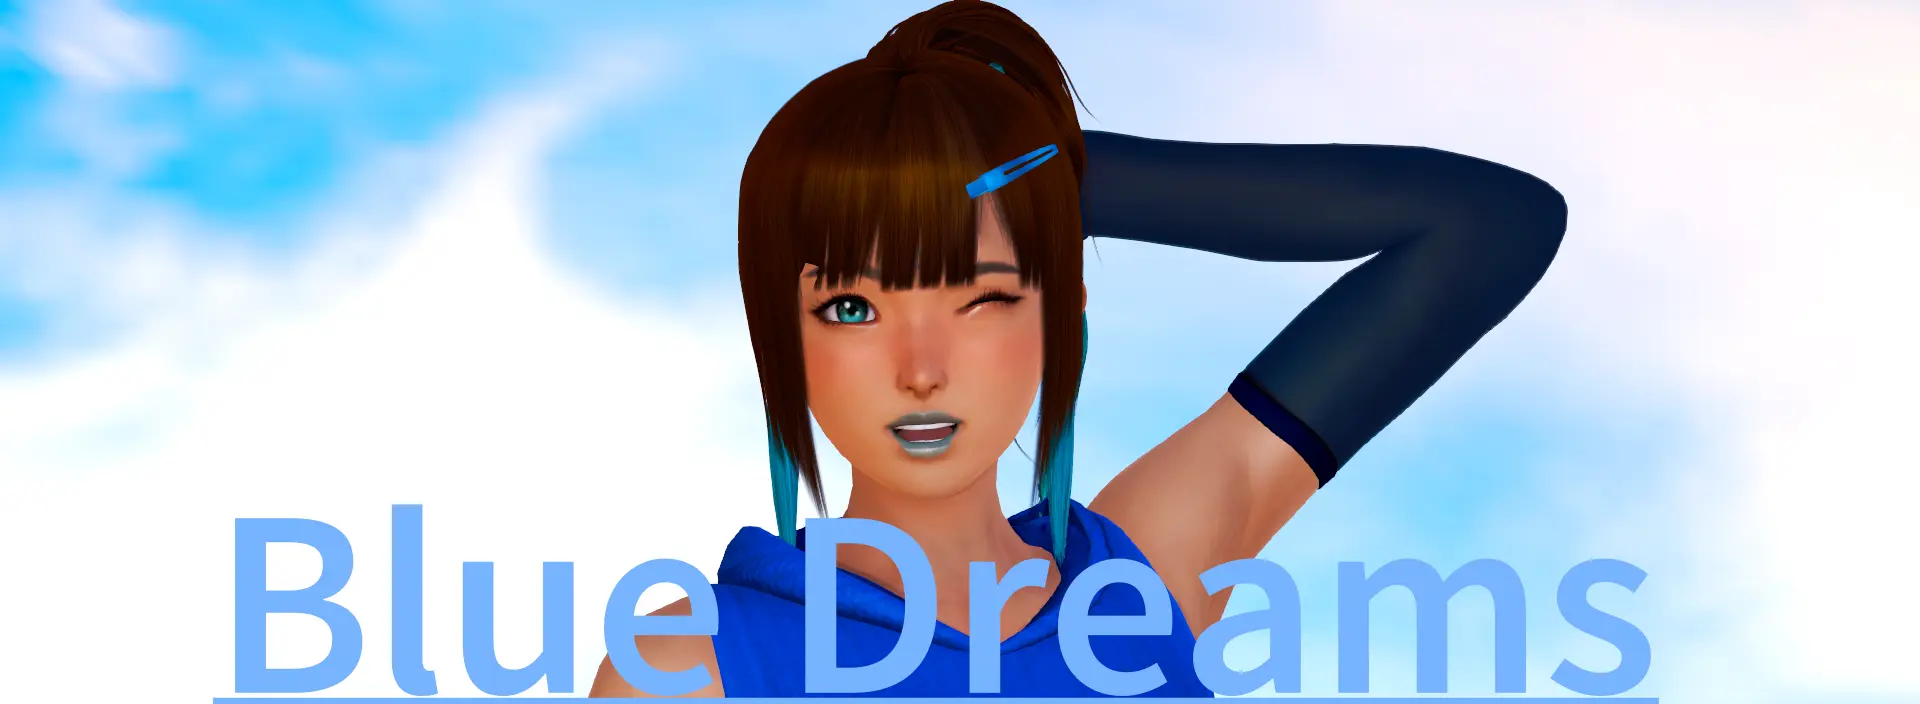 Blue Dreams [v0.1] main image